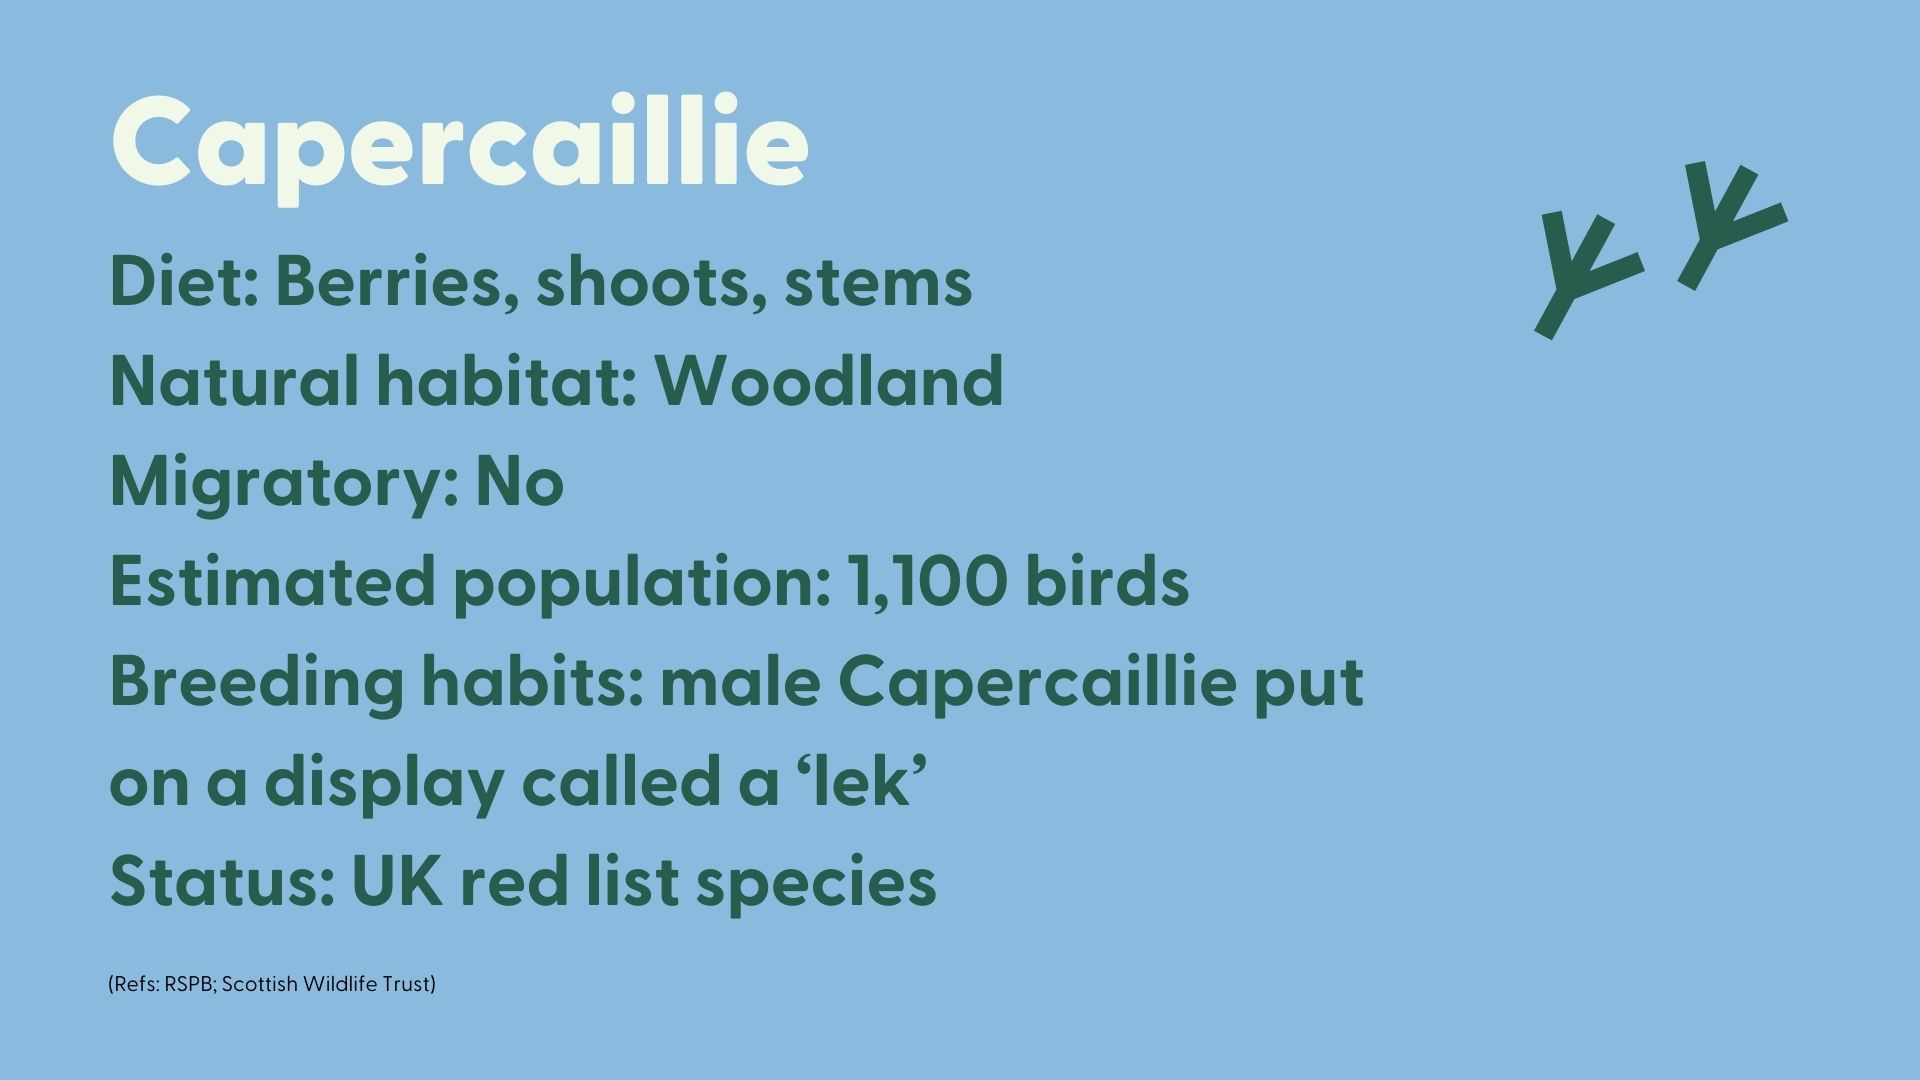 Capercaillie description: Capercaillie   Diet: Berries, shoots, stems   Natural habitat: Woodland   Migratory: No   Estimated population: 1,100 birds   Breeding habits: male Capercaillie put on a display called a ‘lek’   Status: UK red list species 